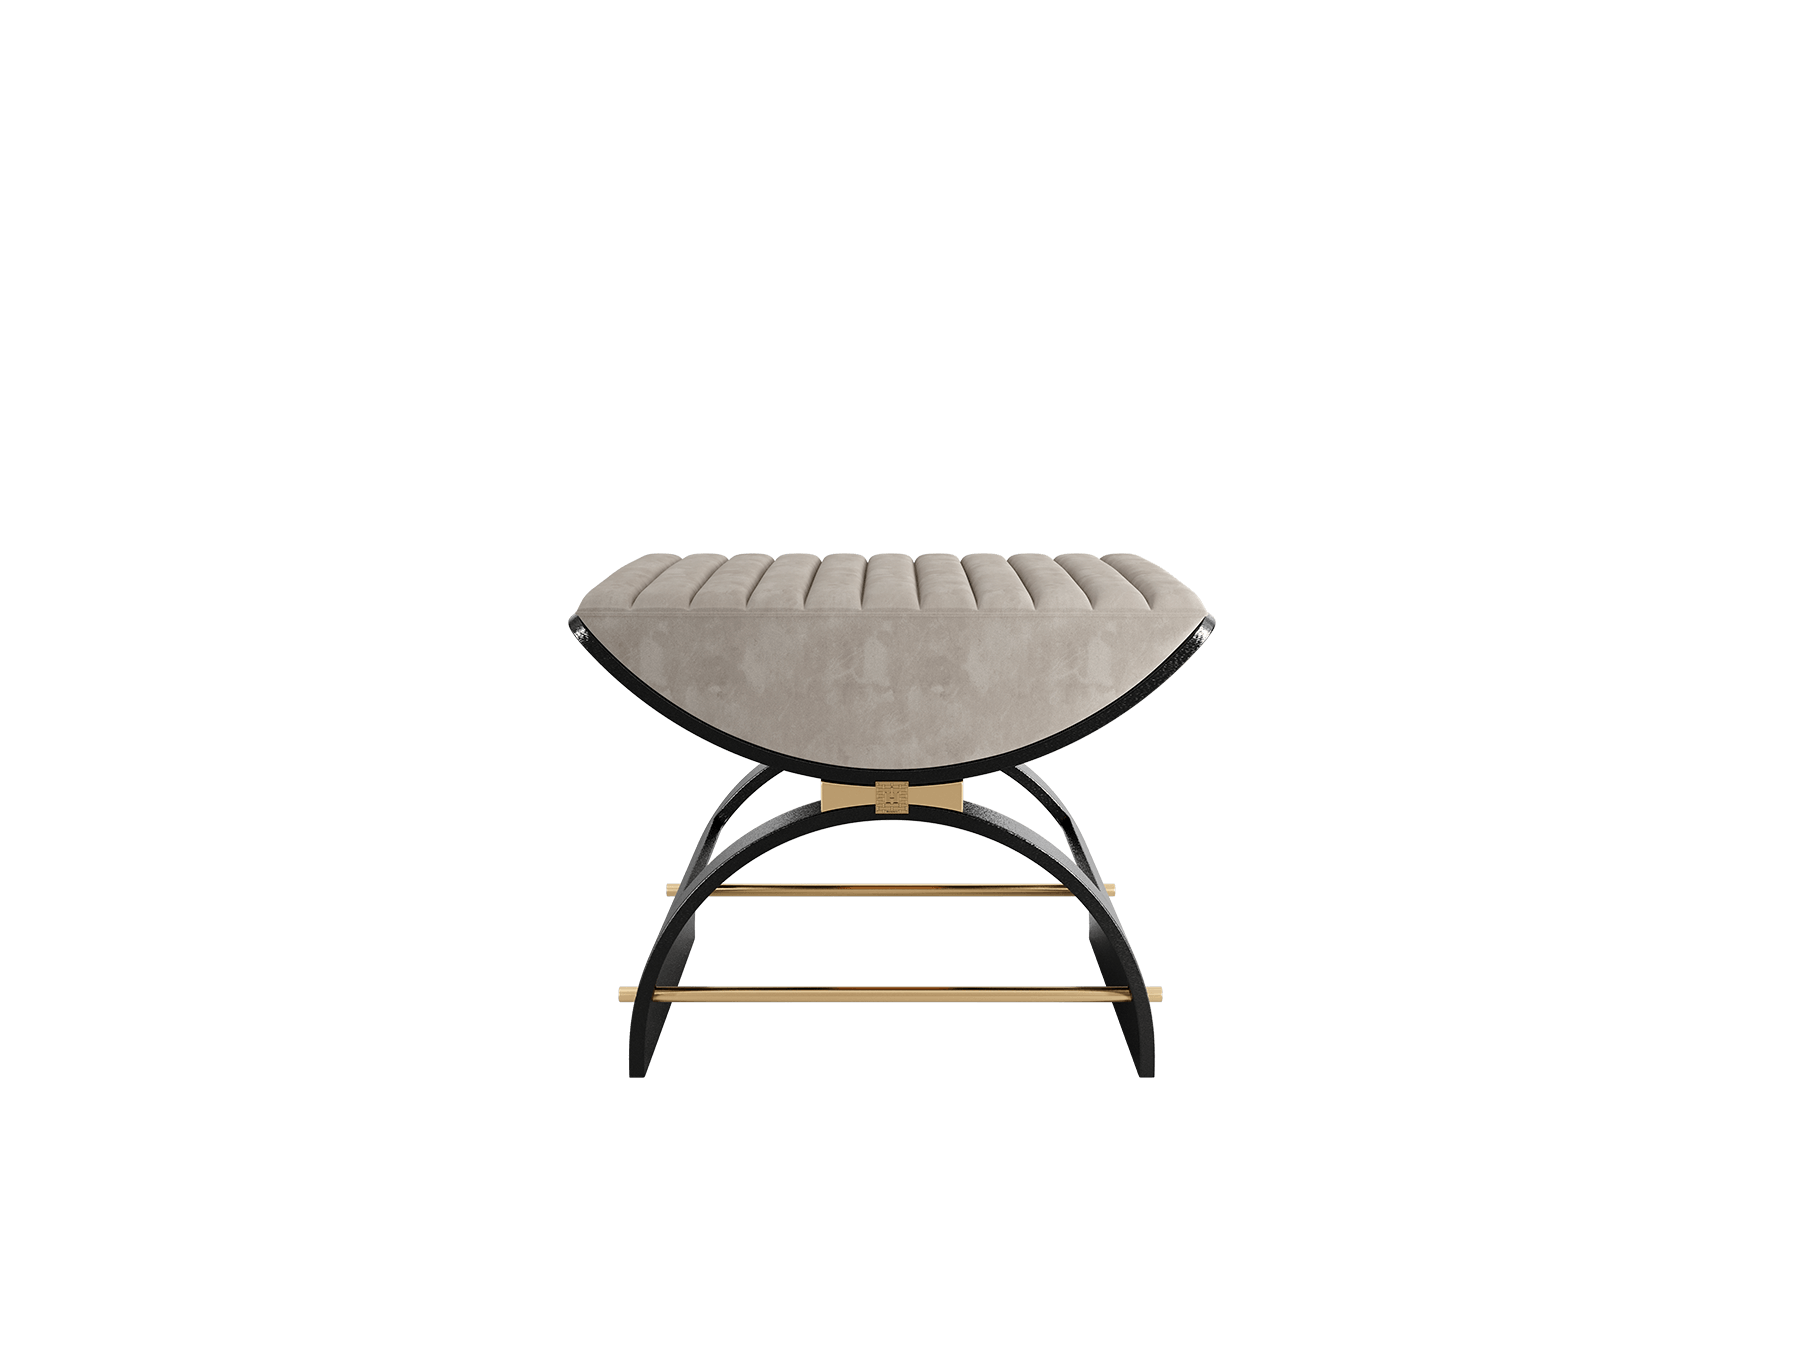 curvy stool for luxury bedroom